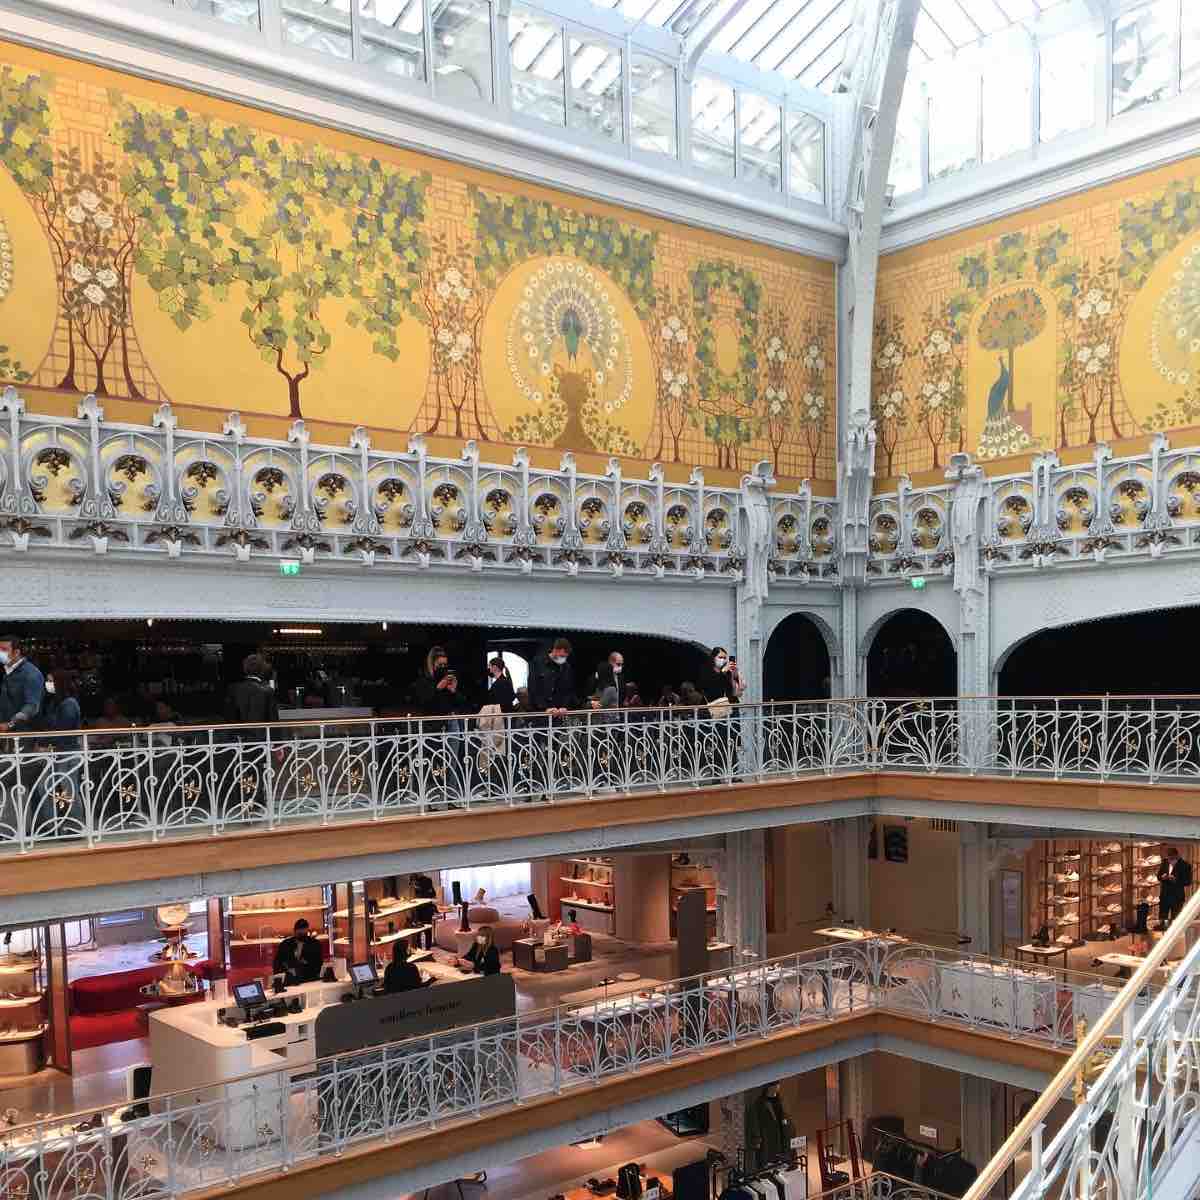 The historic department store La Samaritaine reopens its doors in